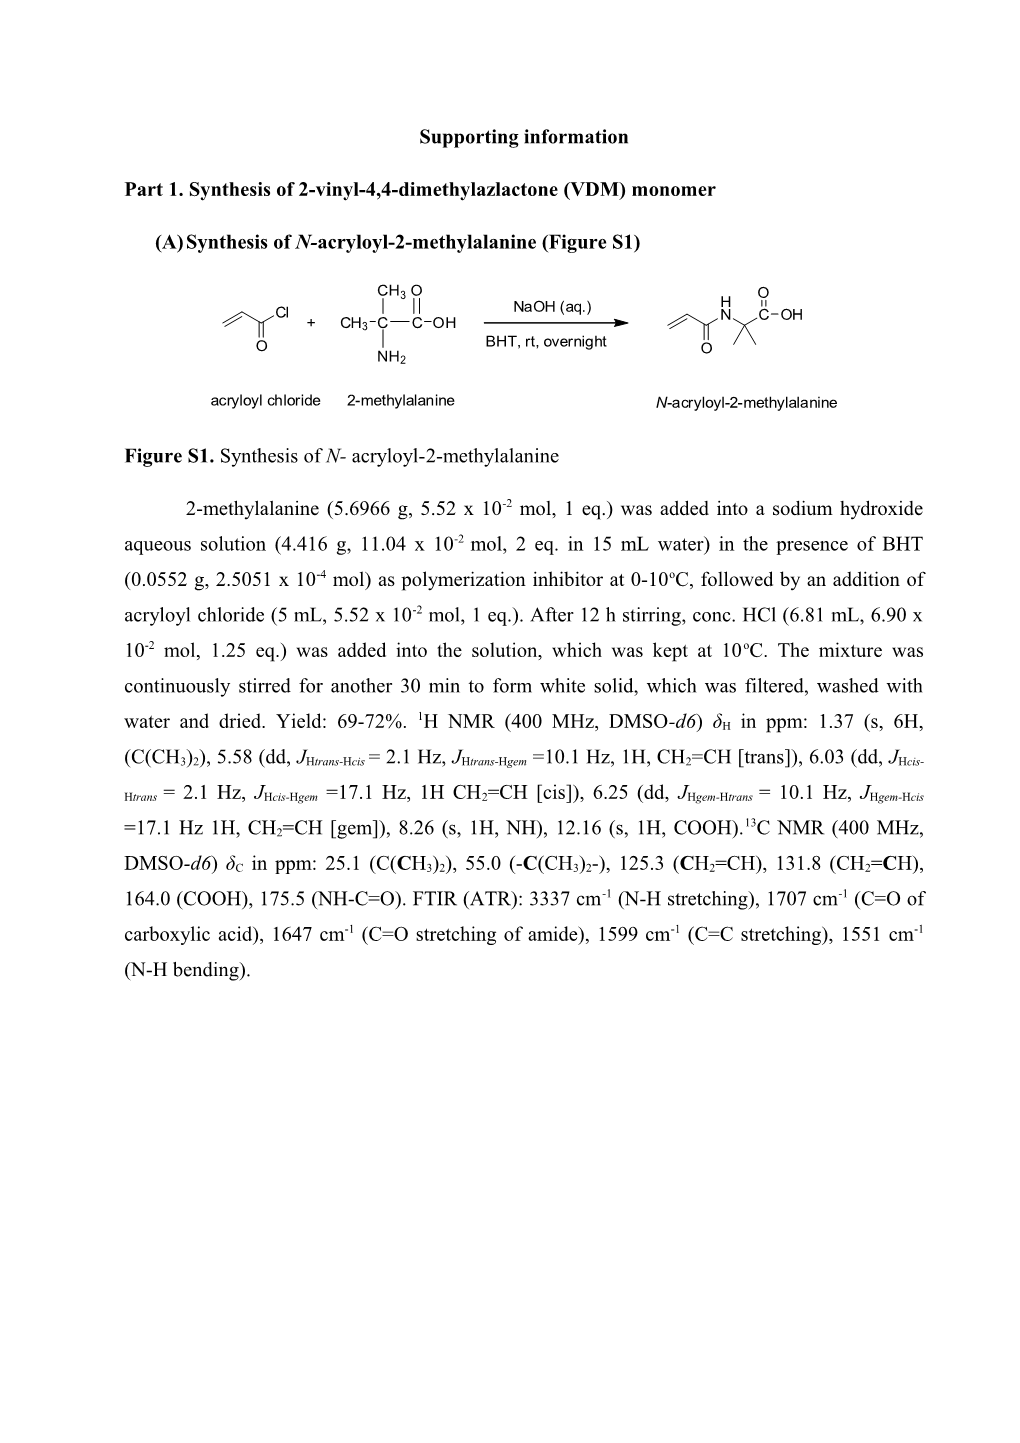 Part 1. Synthesis of 2-Vinyl-4,4-Dimethylazlactone (VDM) Monomer